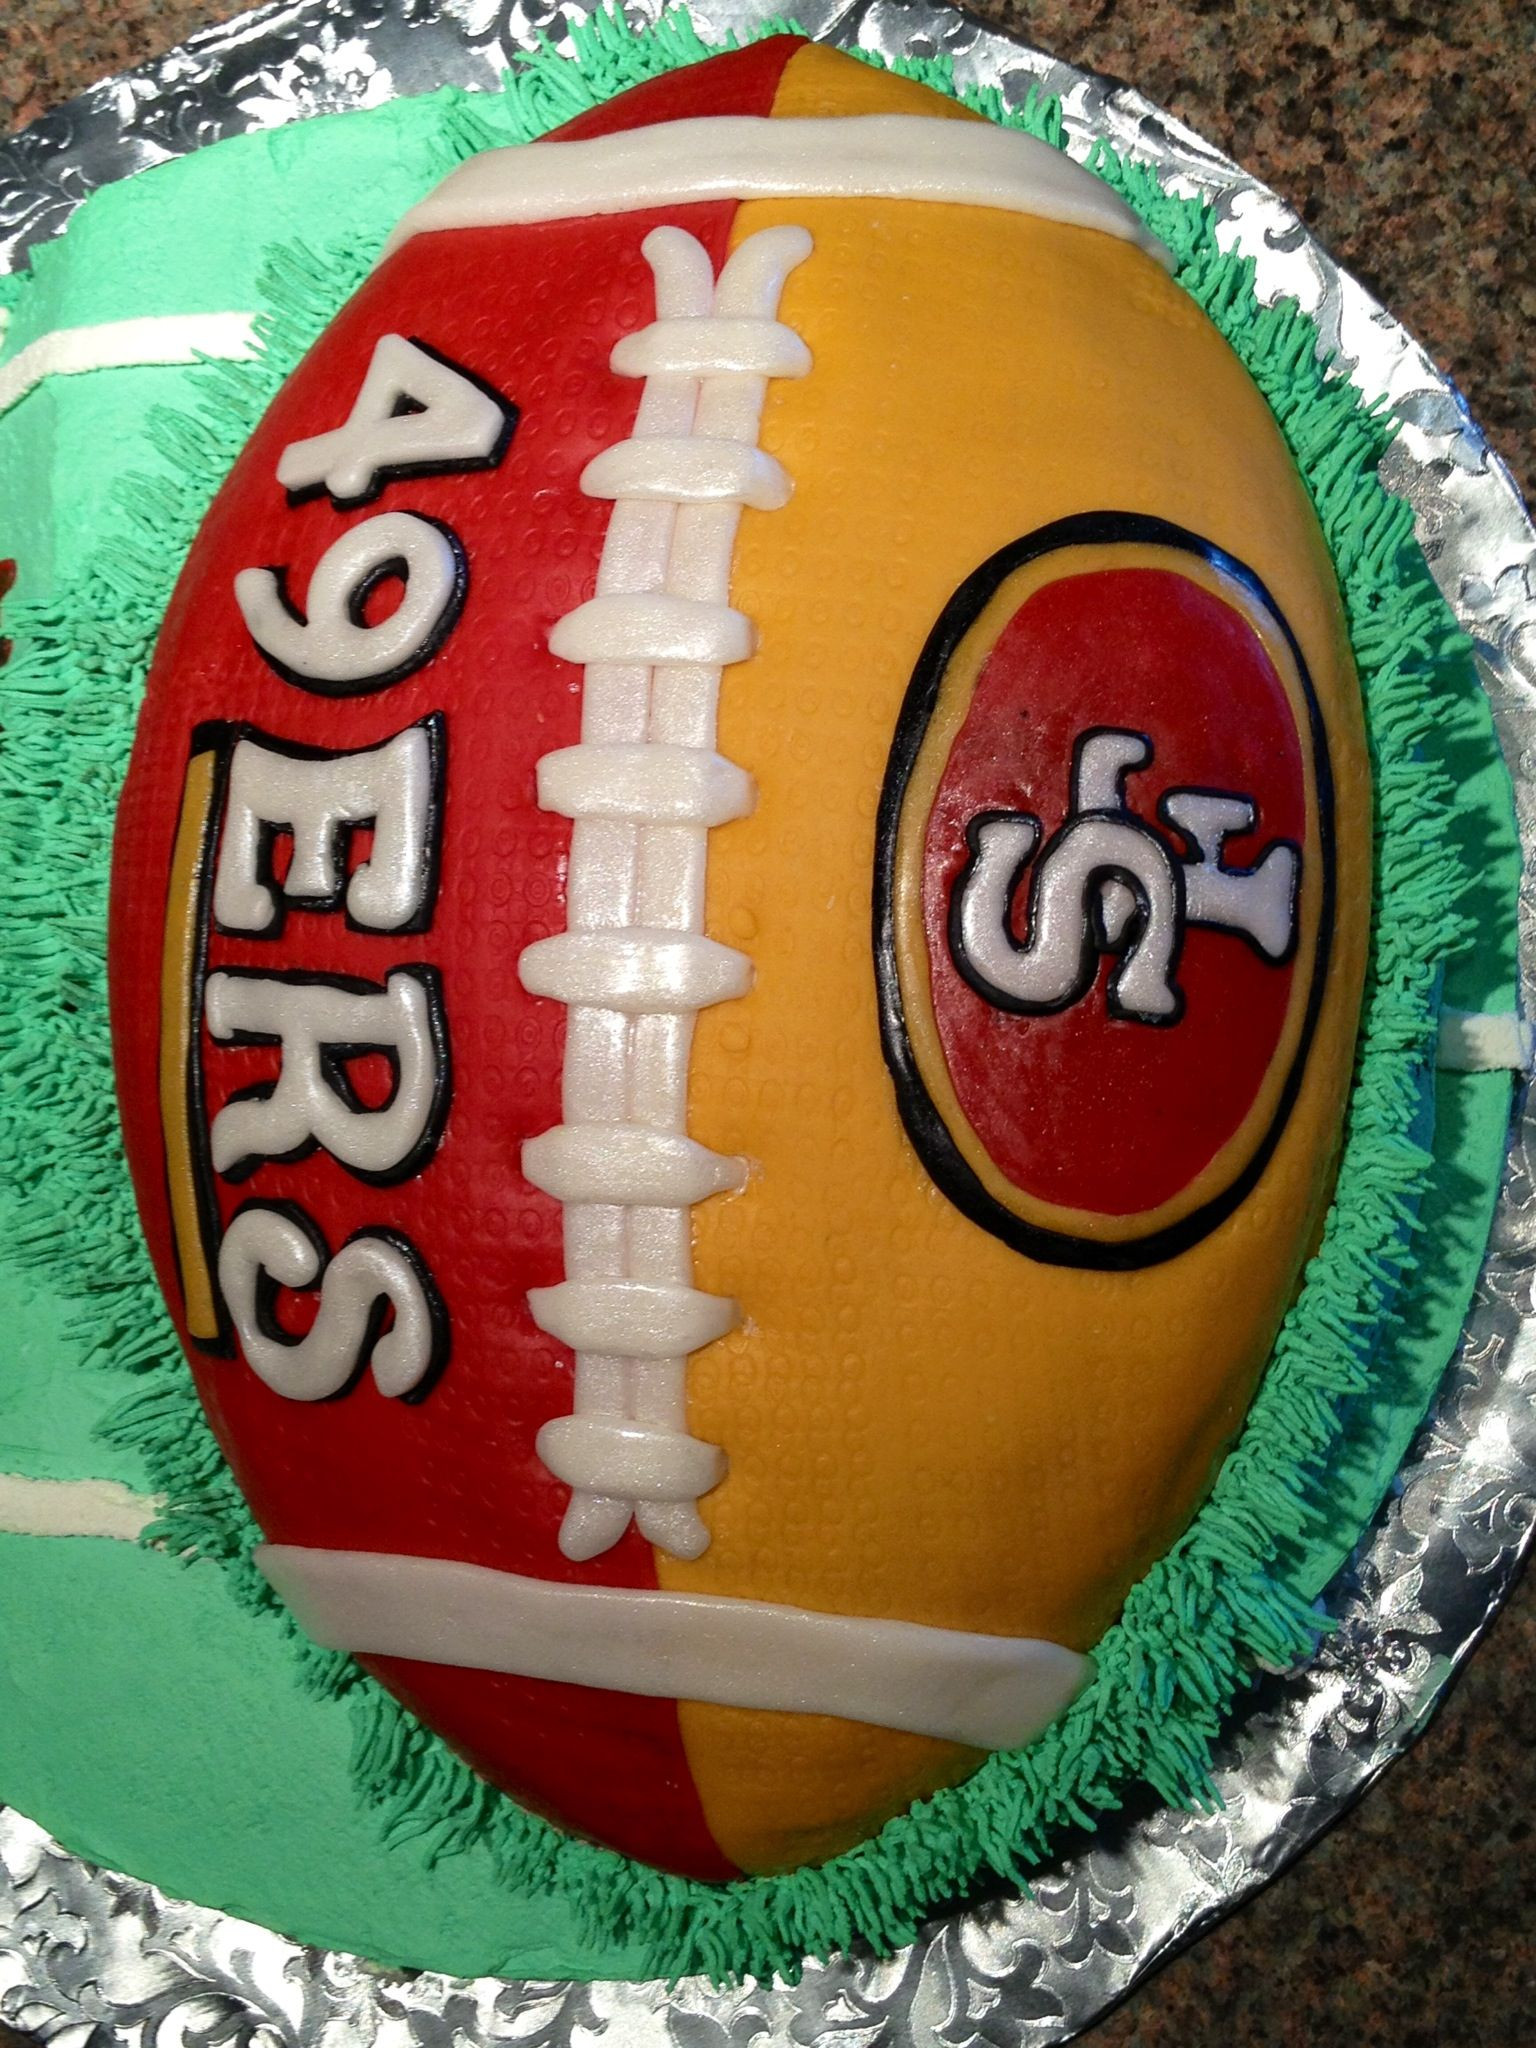 49ers Birthday Cakes
 49ERS cake